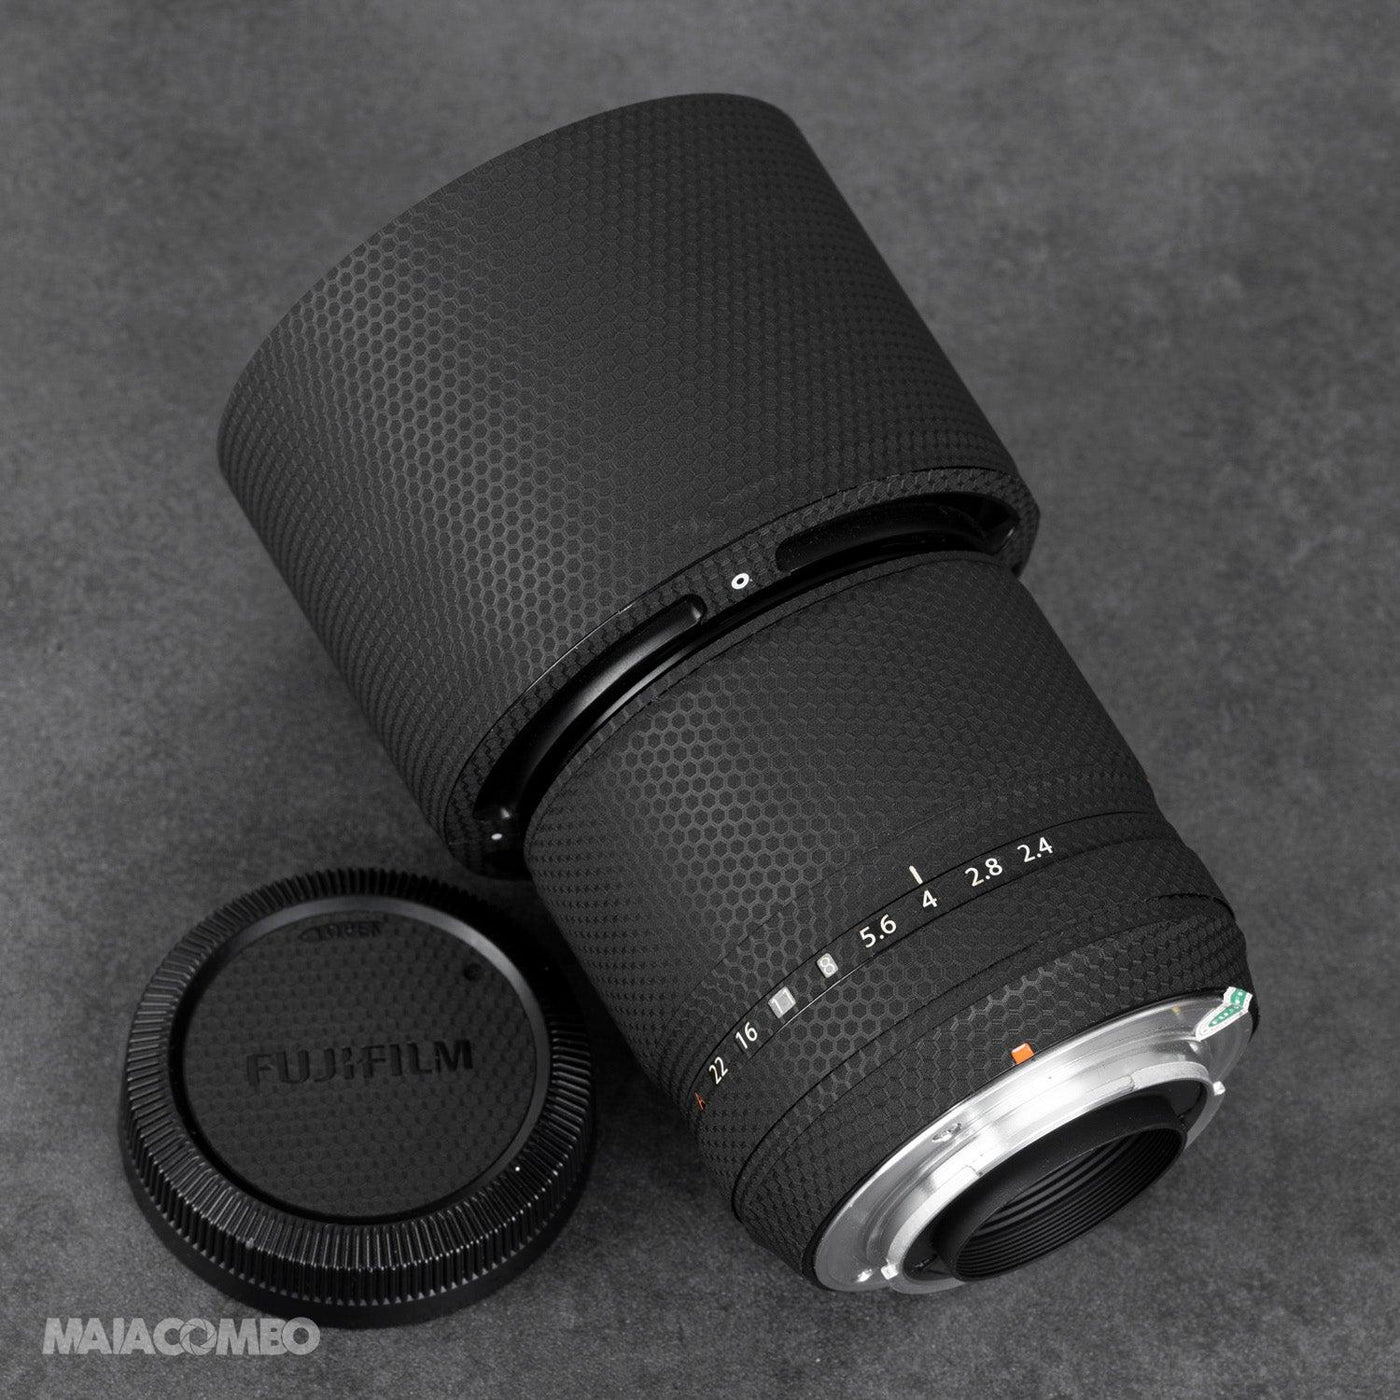 FUJIFILM XF 60mm F2.4 R Macro Lens Skin - MAIACOMBO